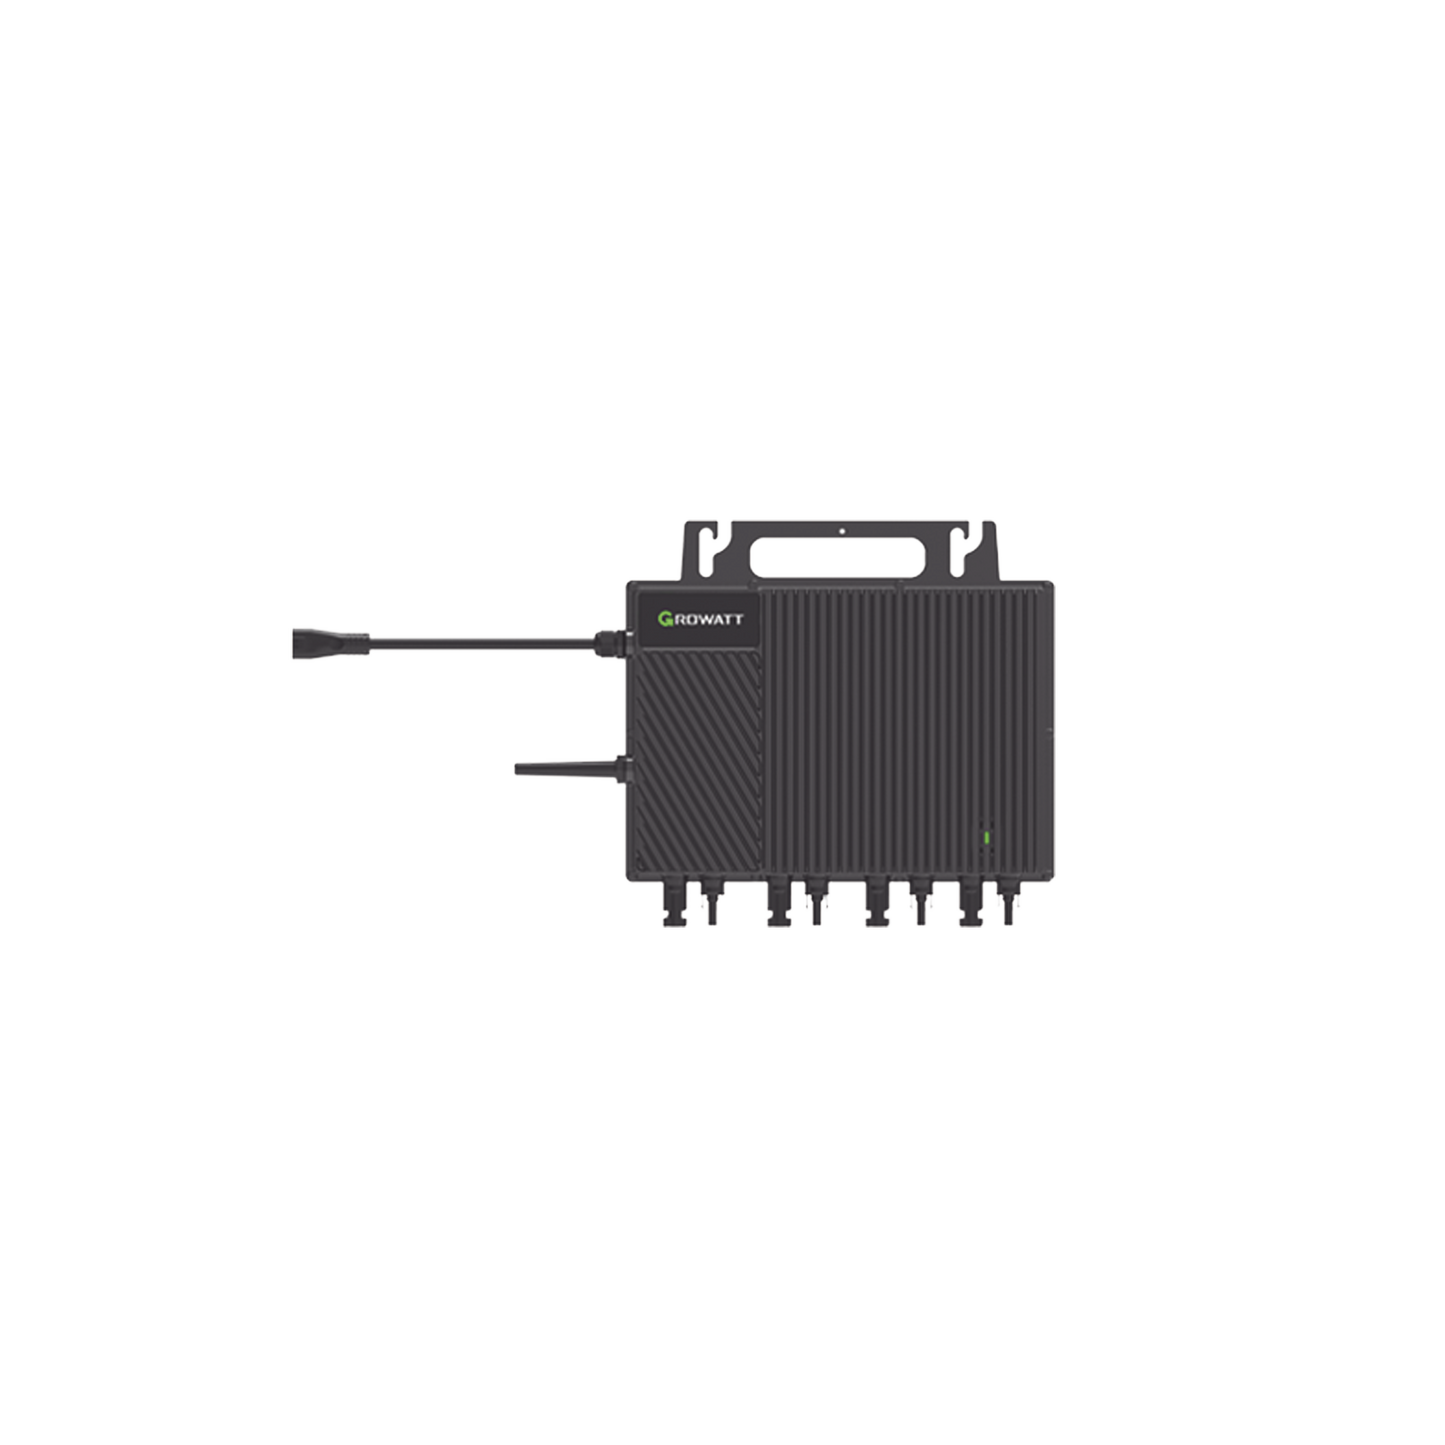 Microinversor 2 Kw, 220 Vca, para Interconexión a Red Eléctrica, IP67, Conexión para Cable Troncal, Para 4 Módulos de Hasta 670 W